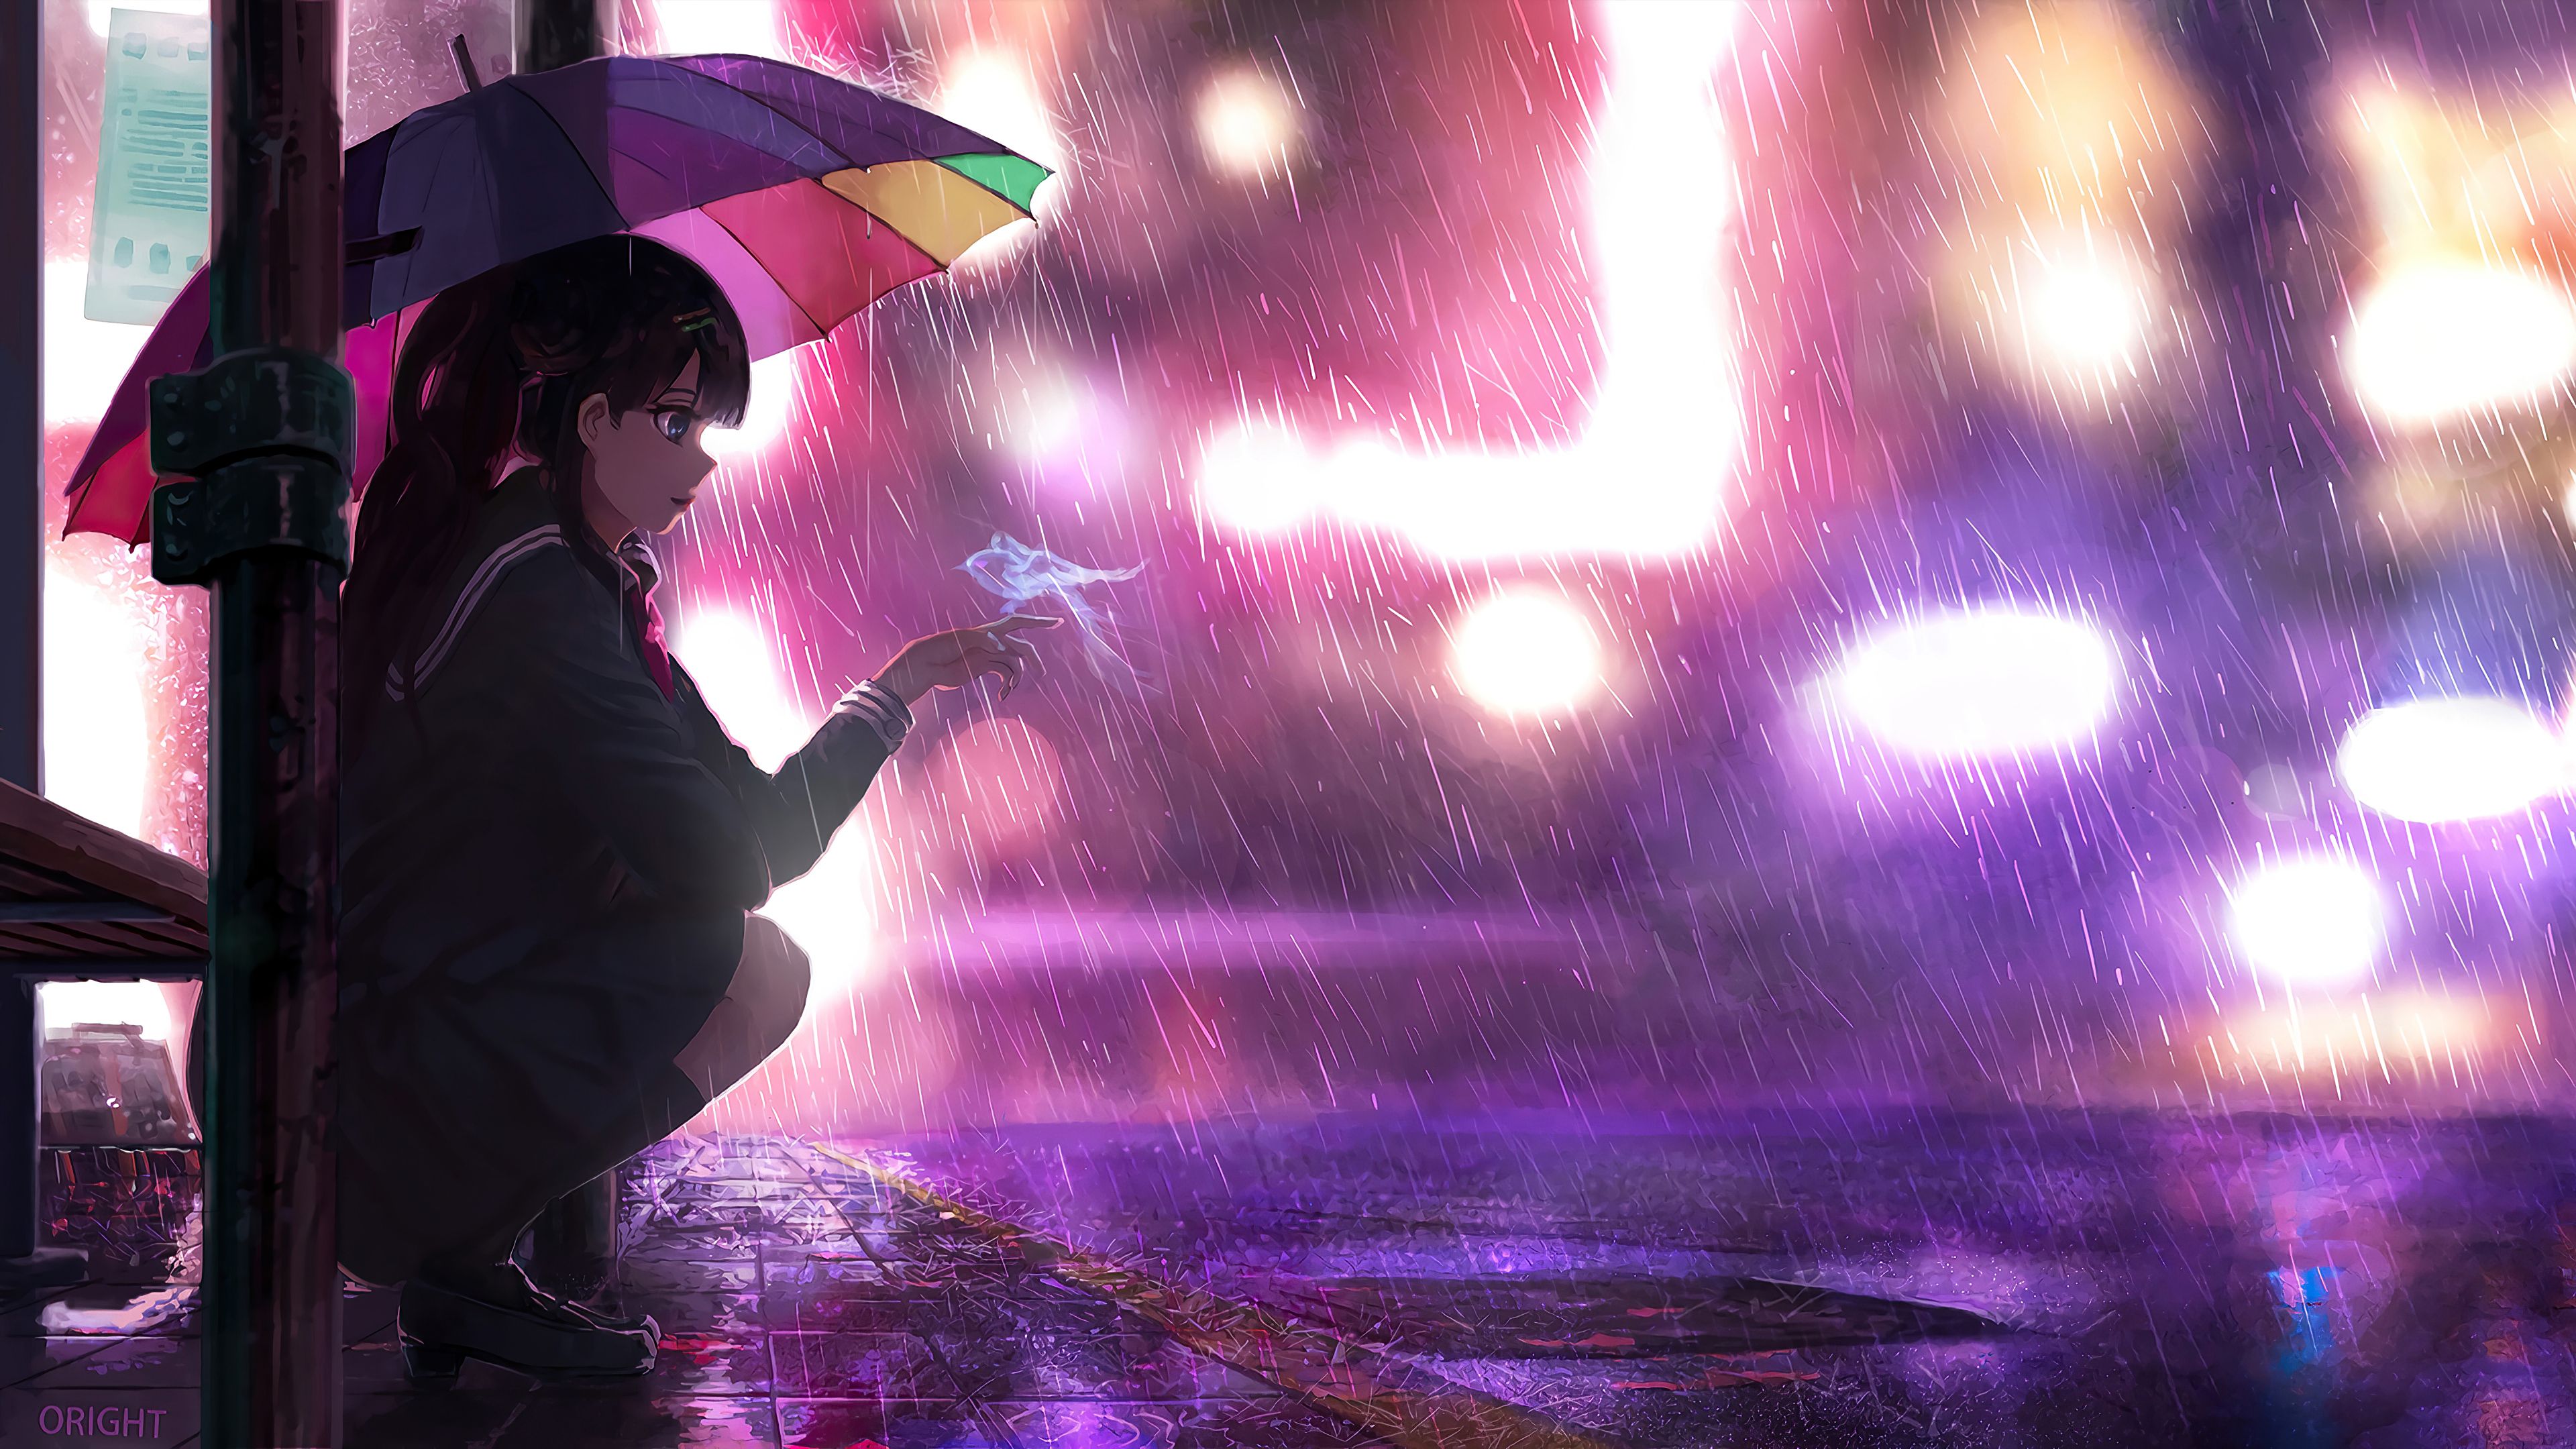 Umbrella Rain Anime Girl 4k, HD Anime, 4k Wallpaper, Image, Background, Photo and Picture